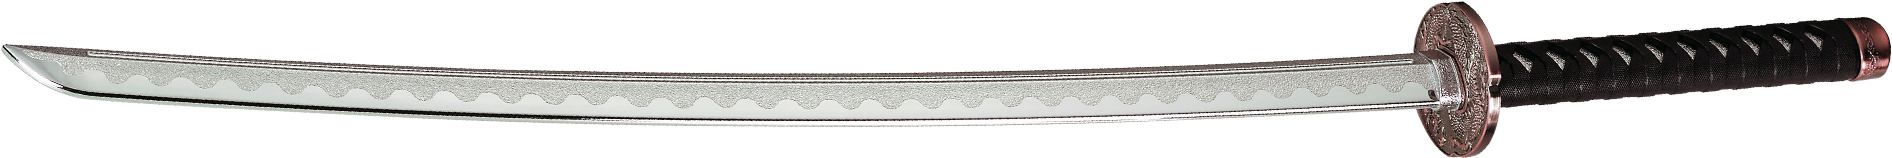 Samurai Katana W/ Silver Coating Blade - Coin Purse (1920x426), Png Download